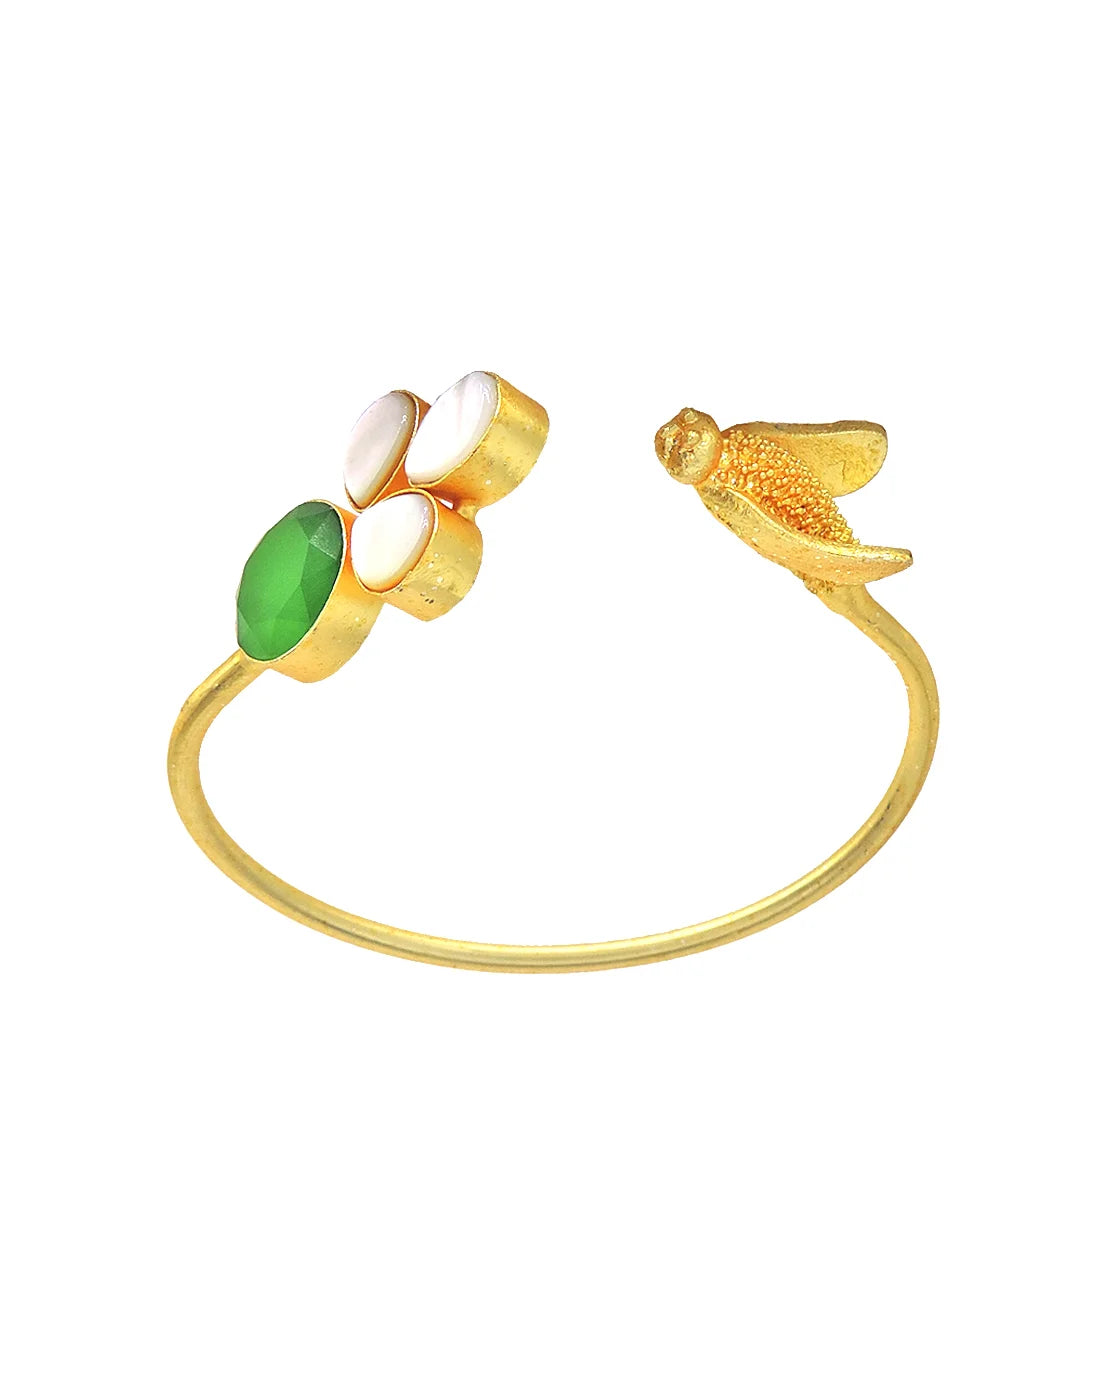 Glass & Shell Cuff- Handcrafted Jewellery from Dori